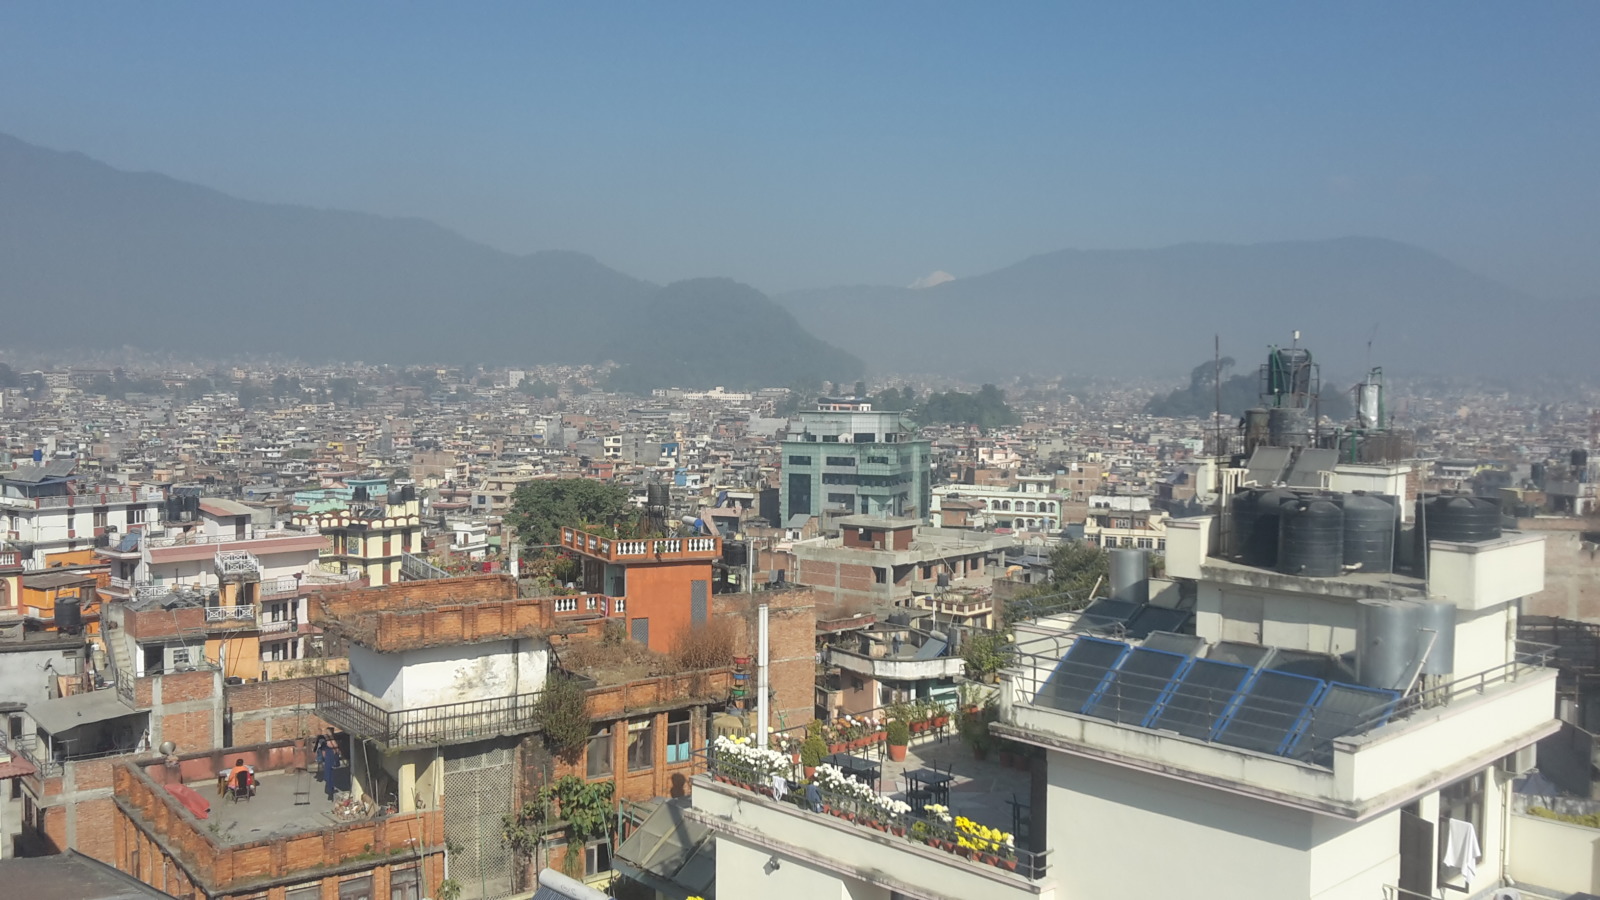 Kathmandu viewed from the hotel roof.